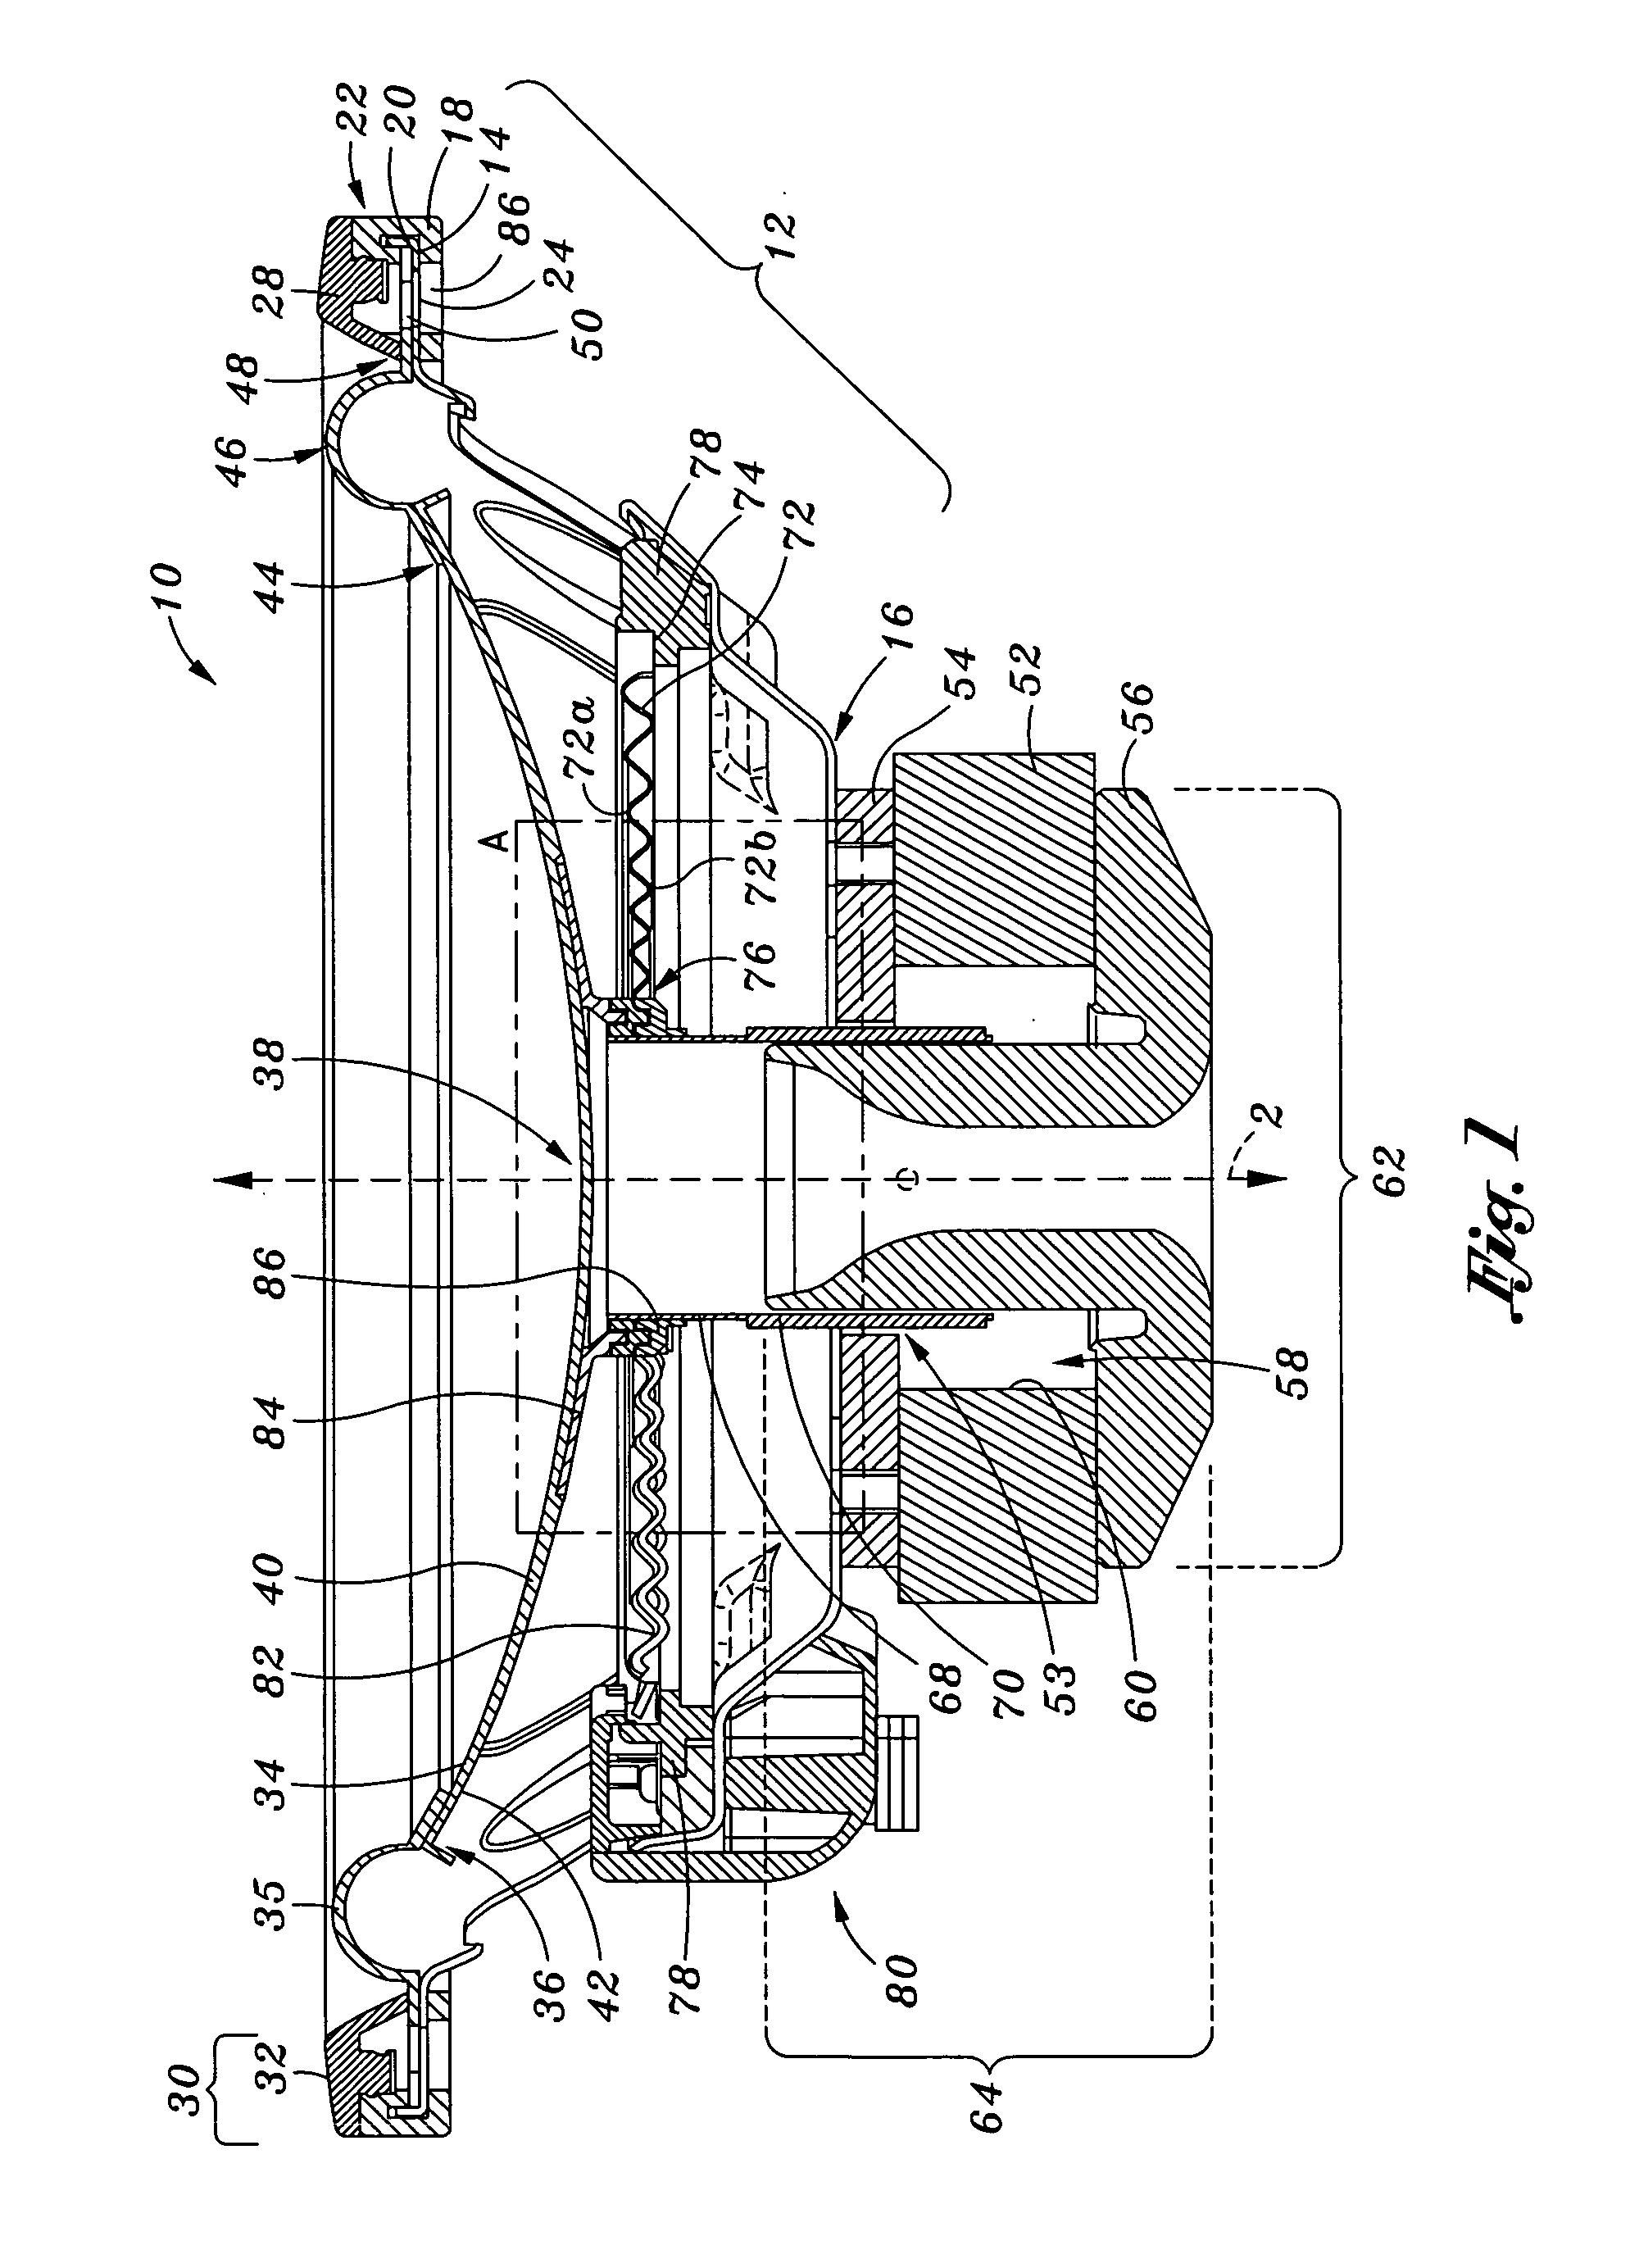 Loudspeaker bobbin interconnection assembly